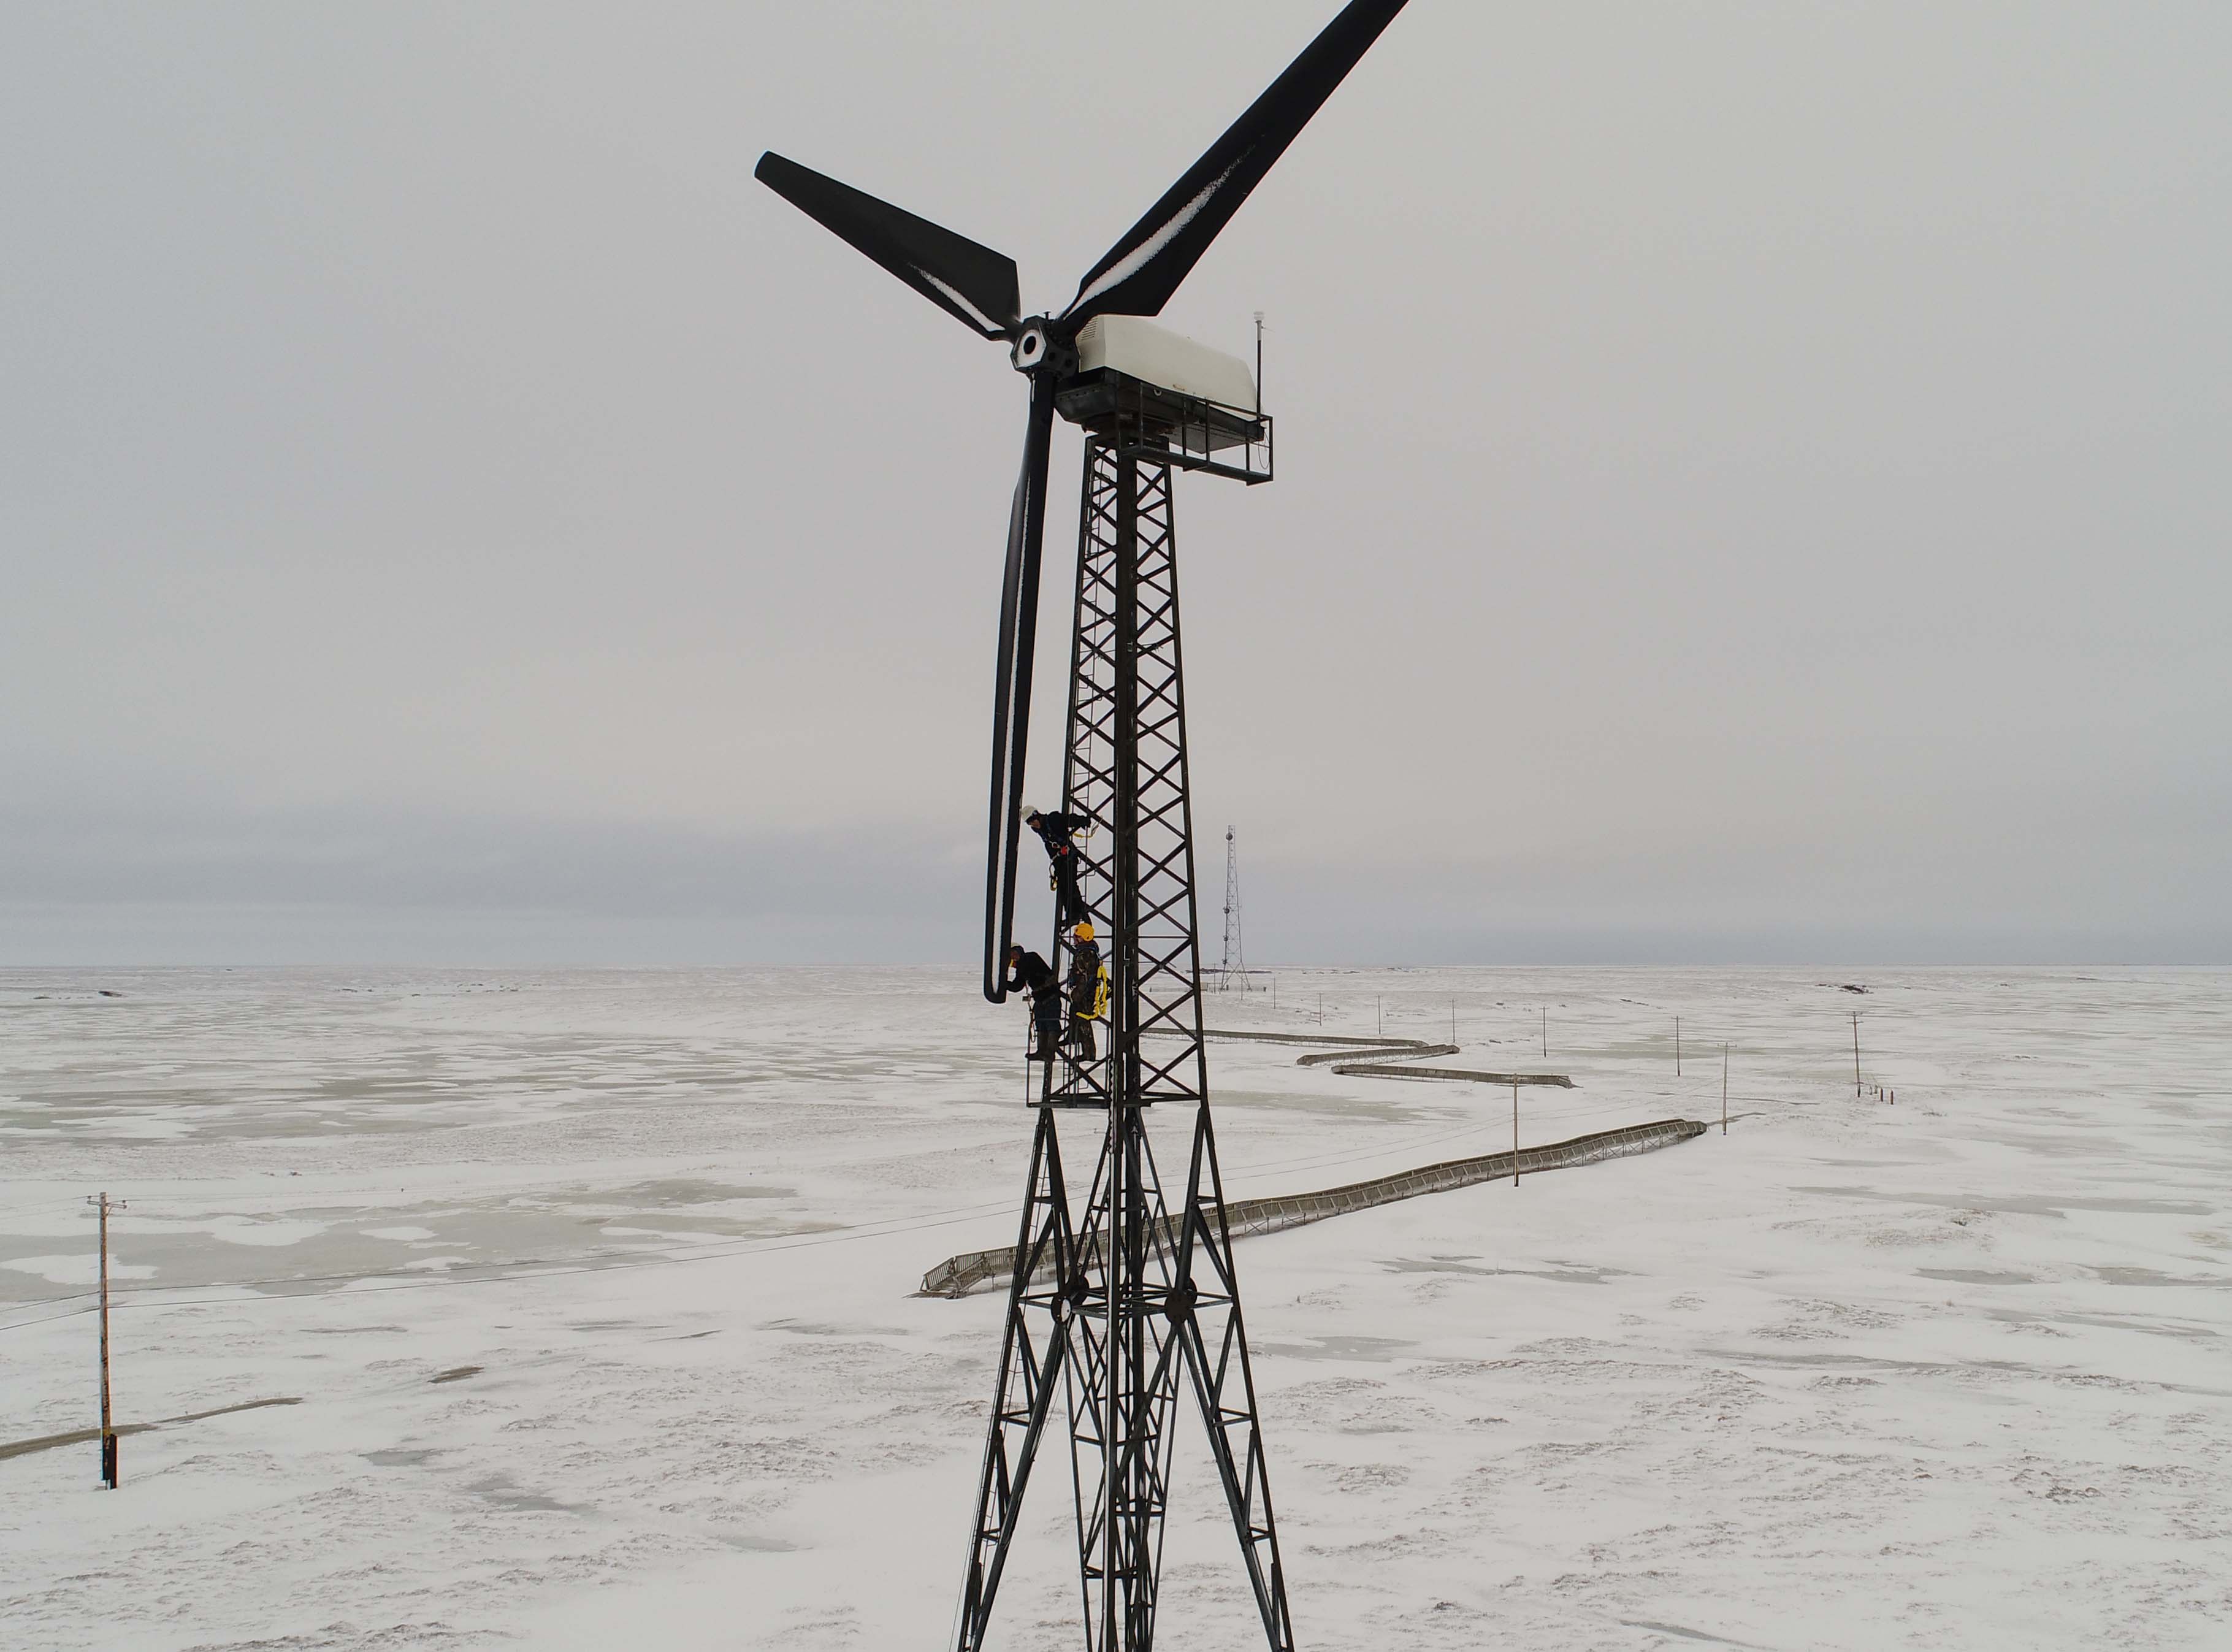 Video Shows Wind Turbine Maintenance in Remote Coastal Community